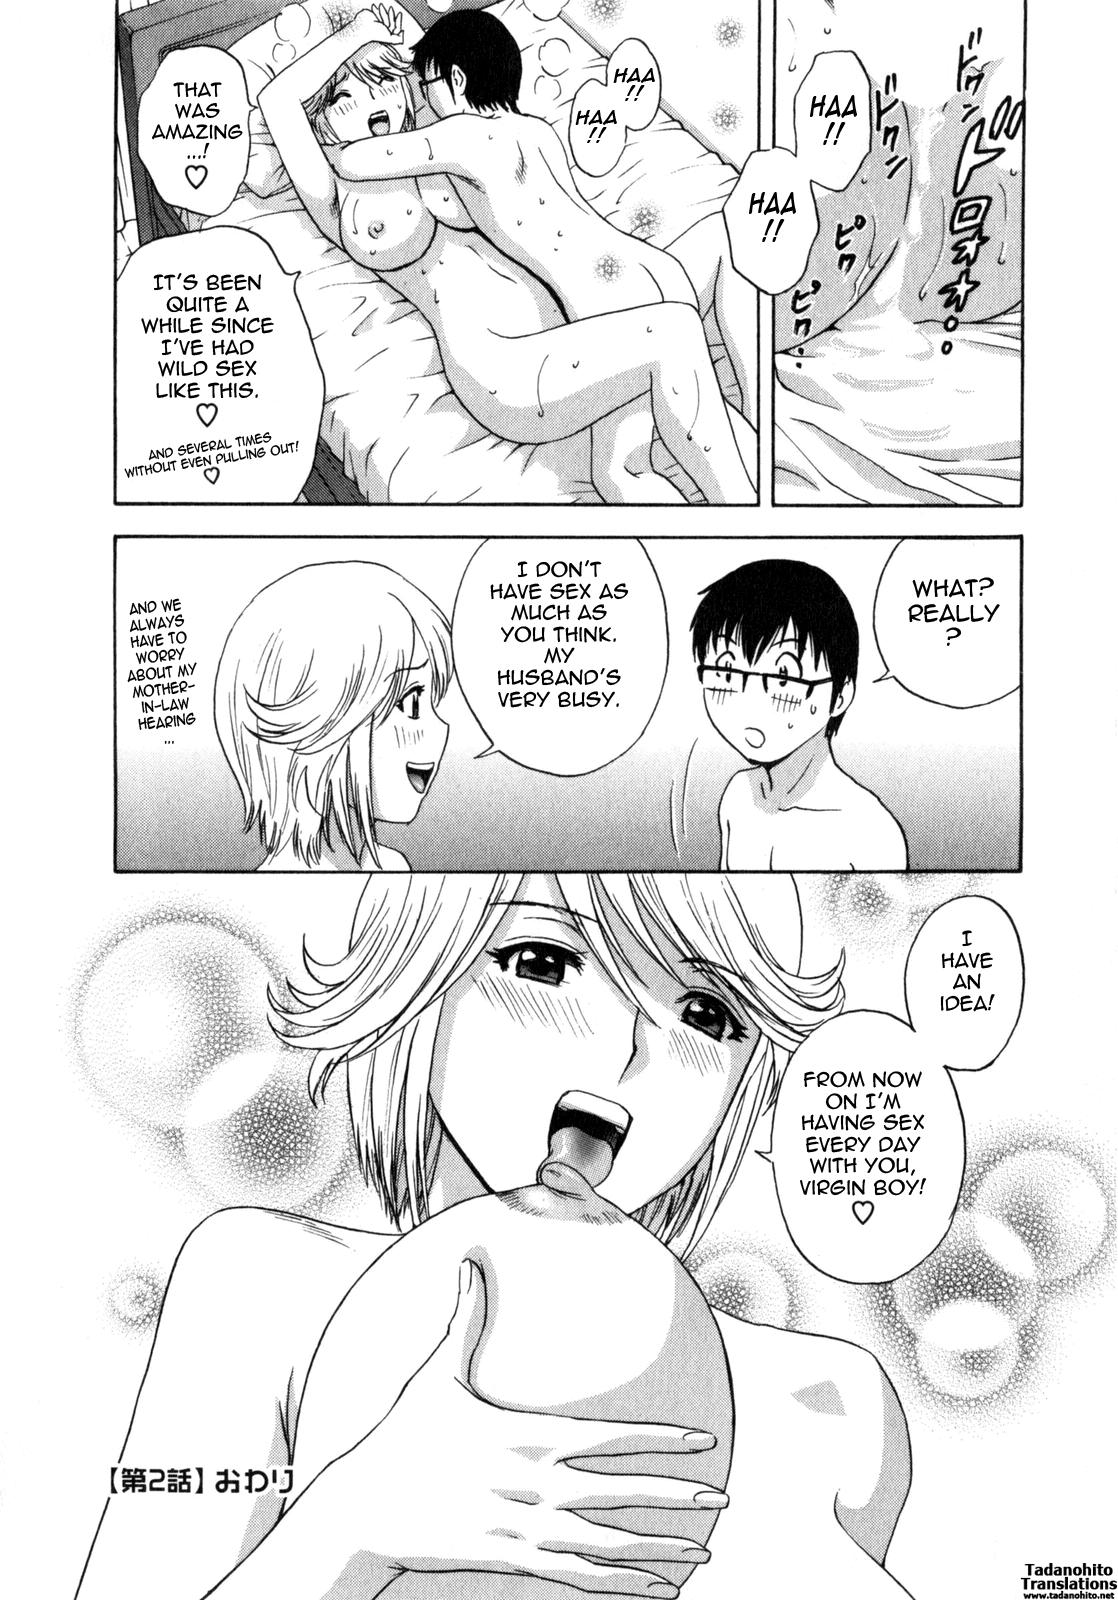 [Hidemaru] Life with Married Women Just Like a Manga 1 - Ch. 1-3 [English] {Tadanohito} 43